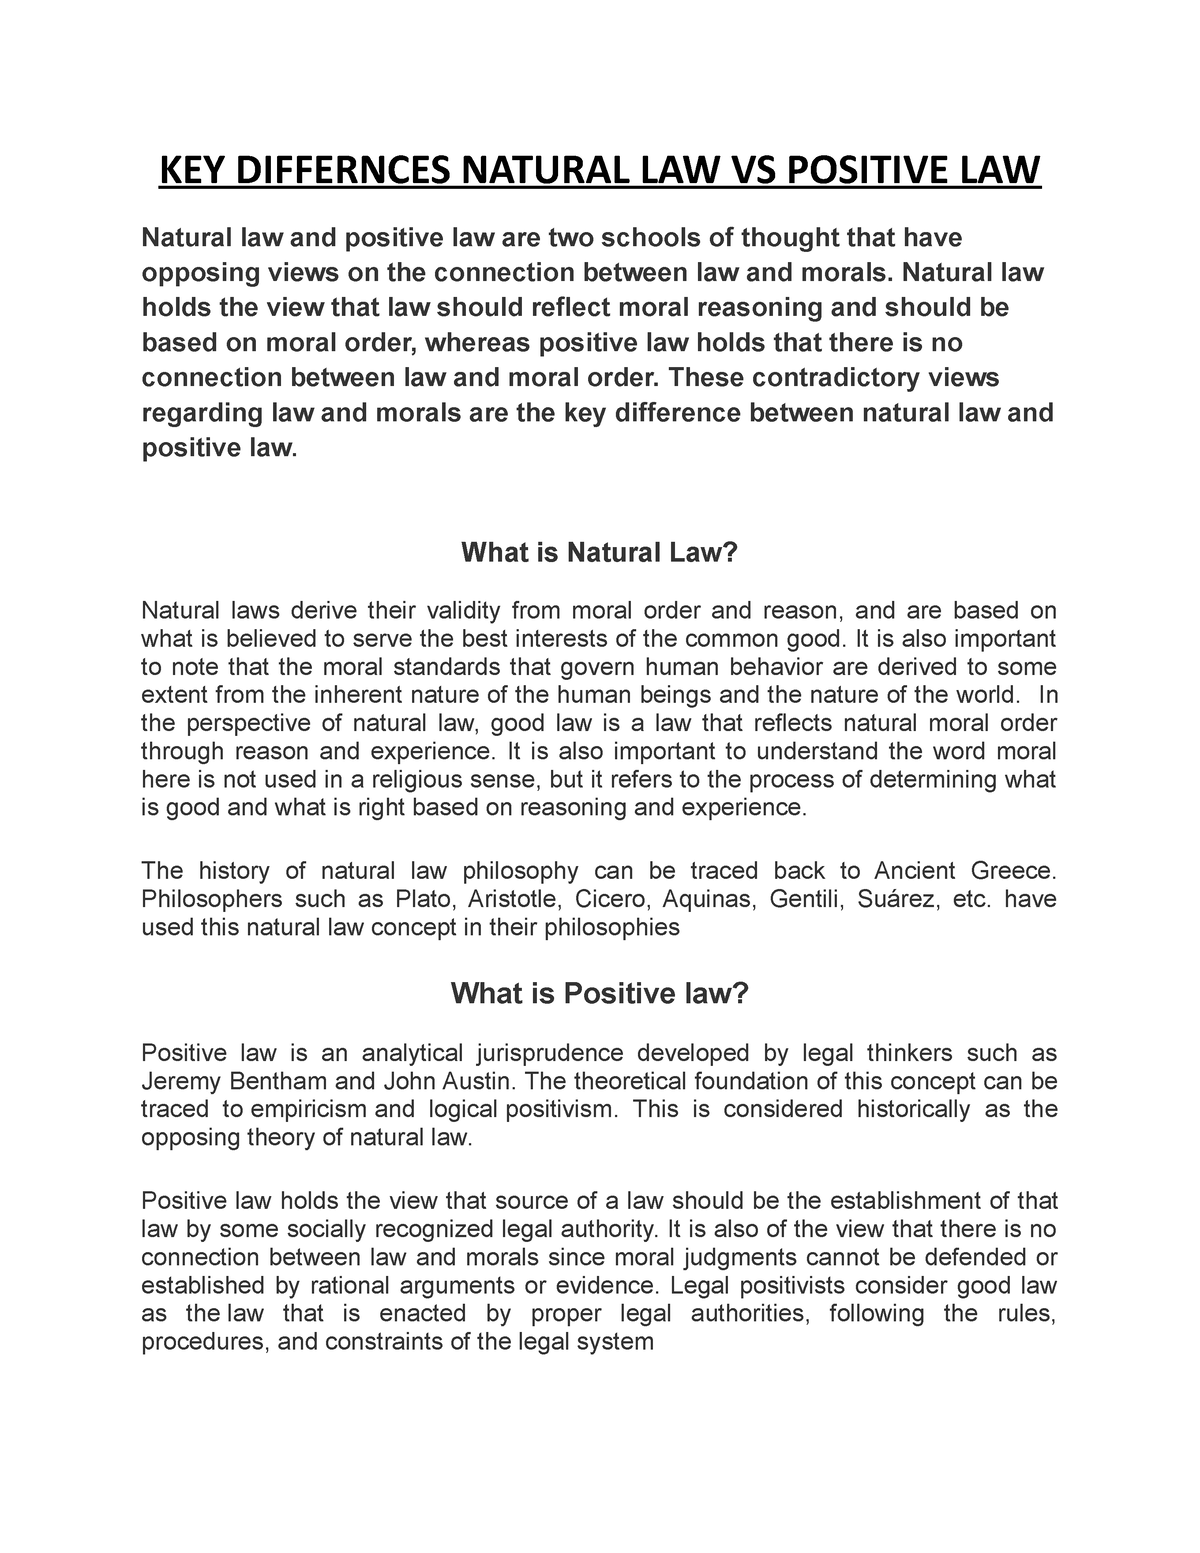 natural law and legal positivism essay